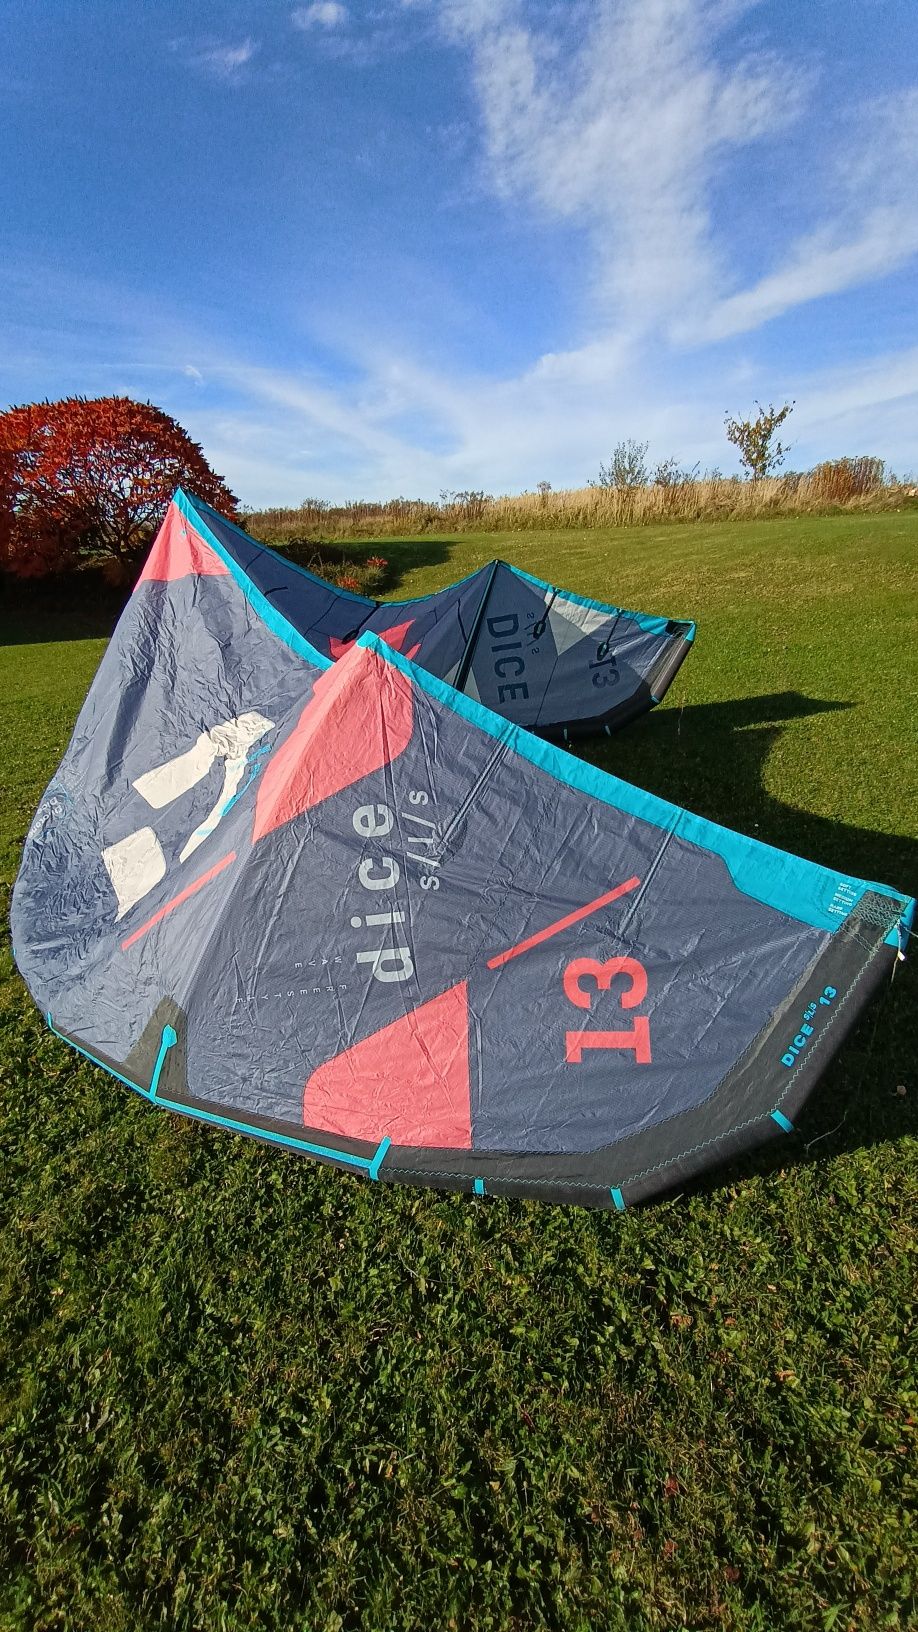 Duotone Dice SLS 13m² latawiec kite